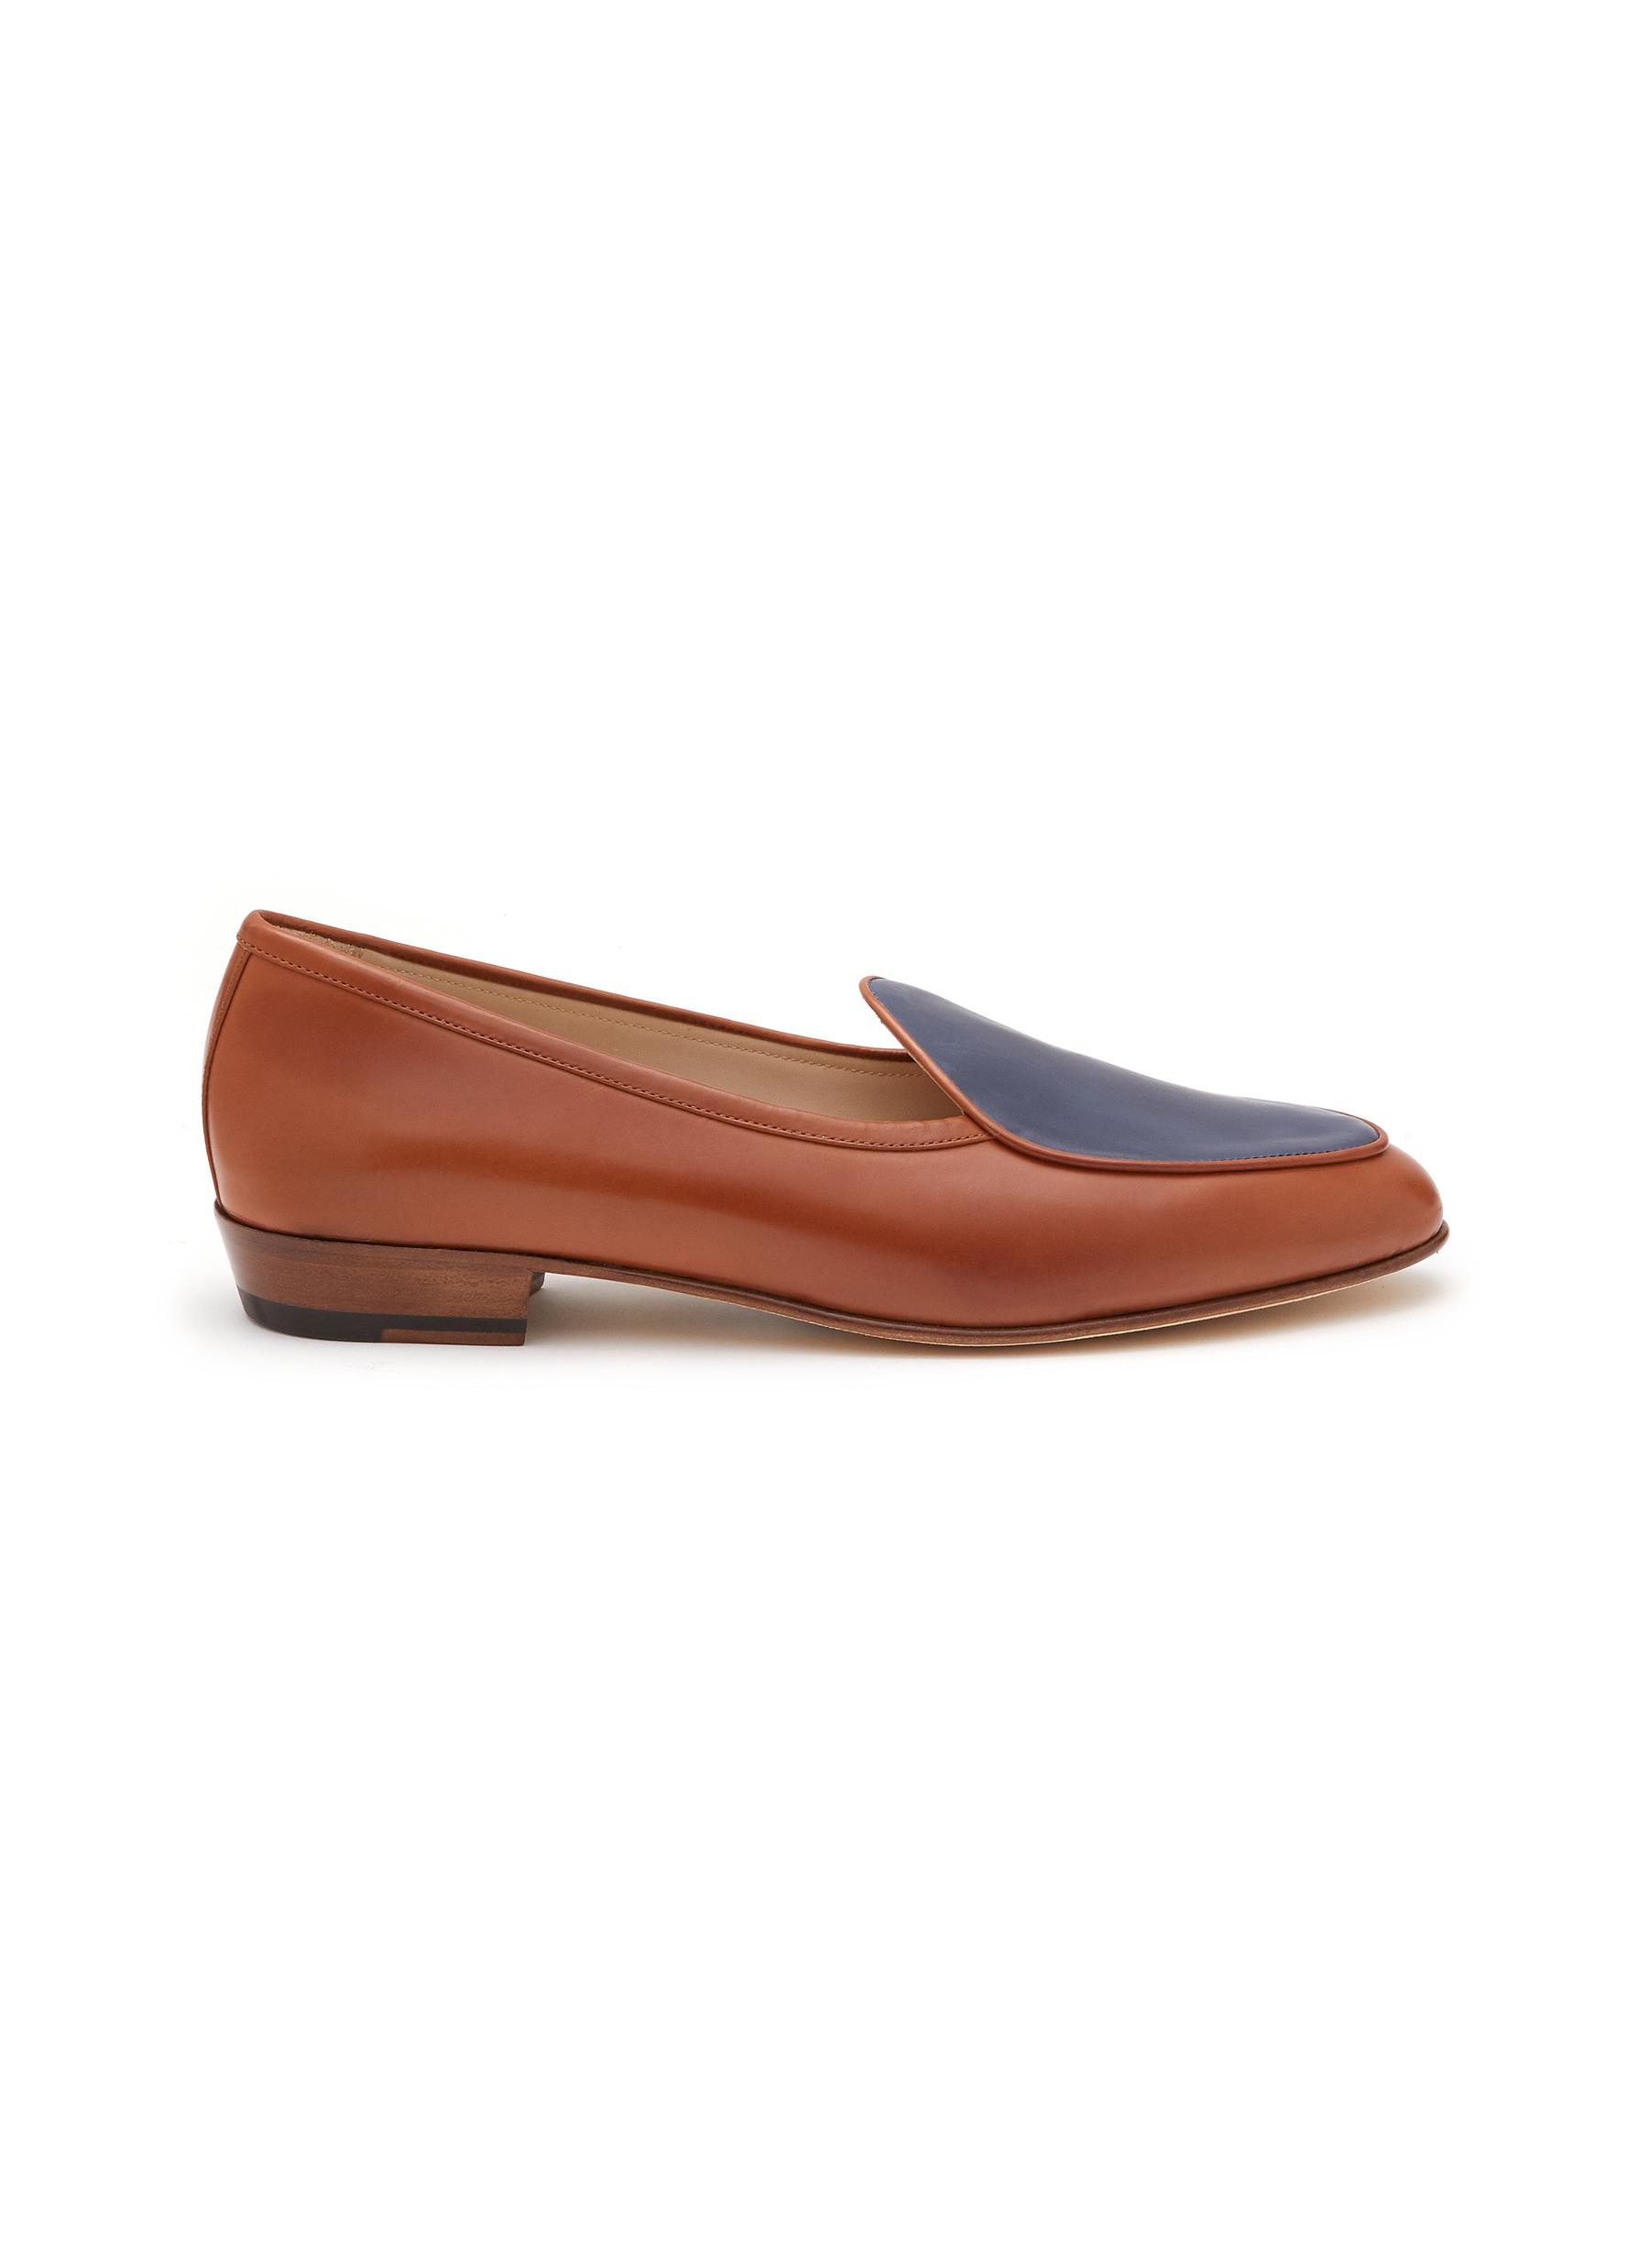 Baudoin & Lange ‘sagan Plain' Bicolour Low Vamp Leather Loafers In Multi-colour